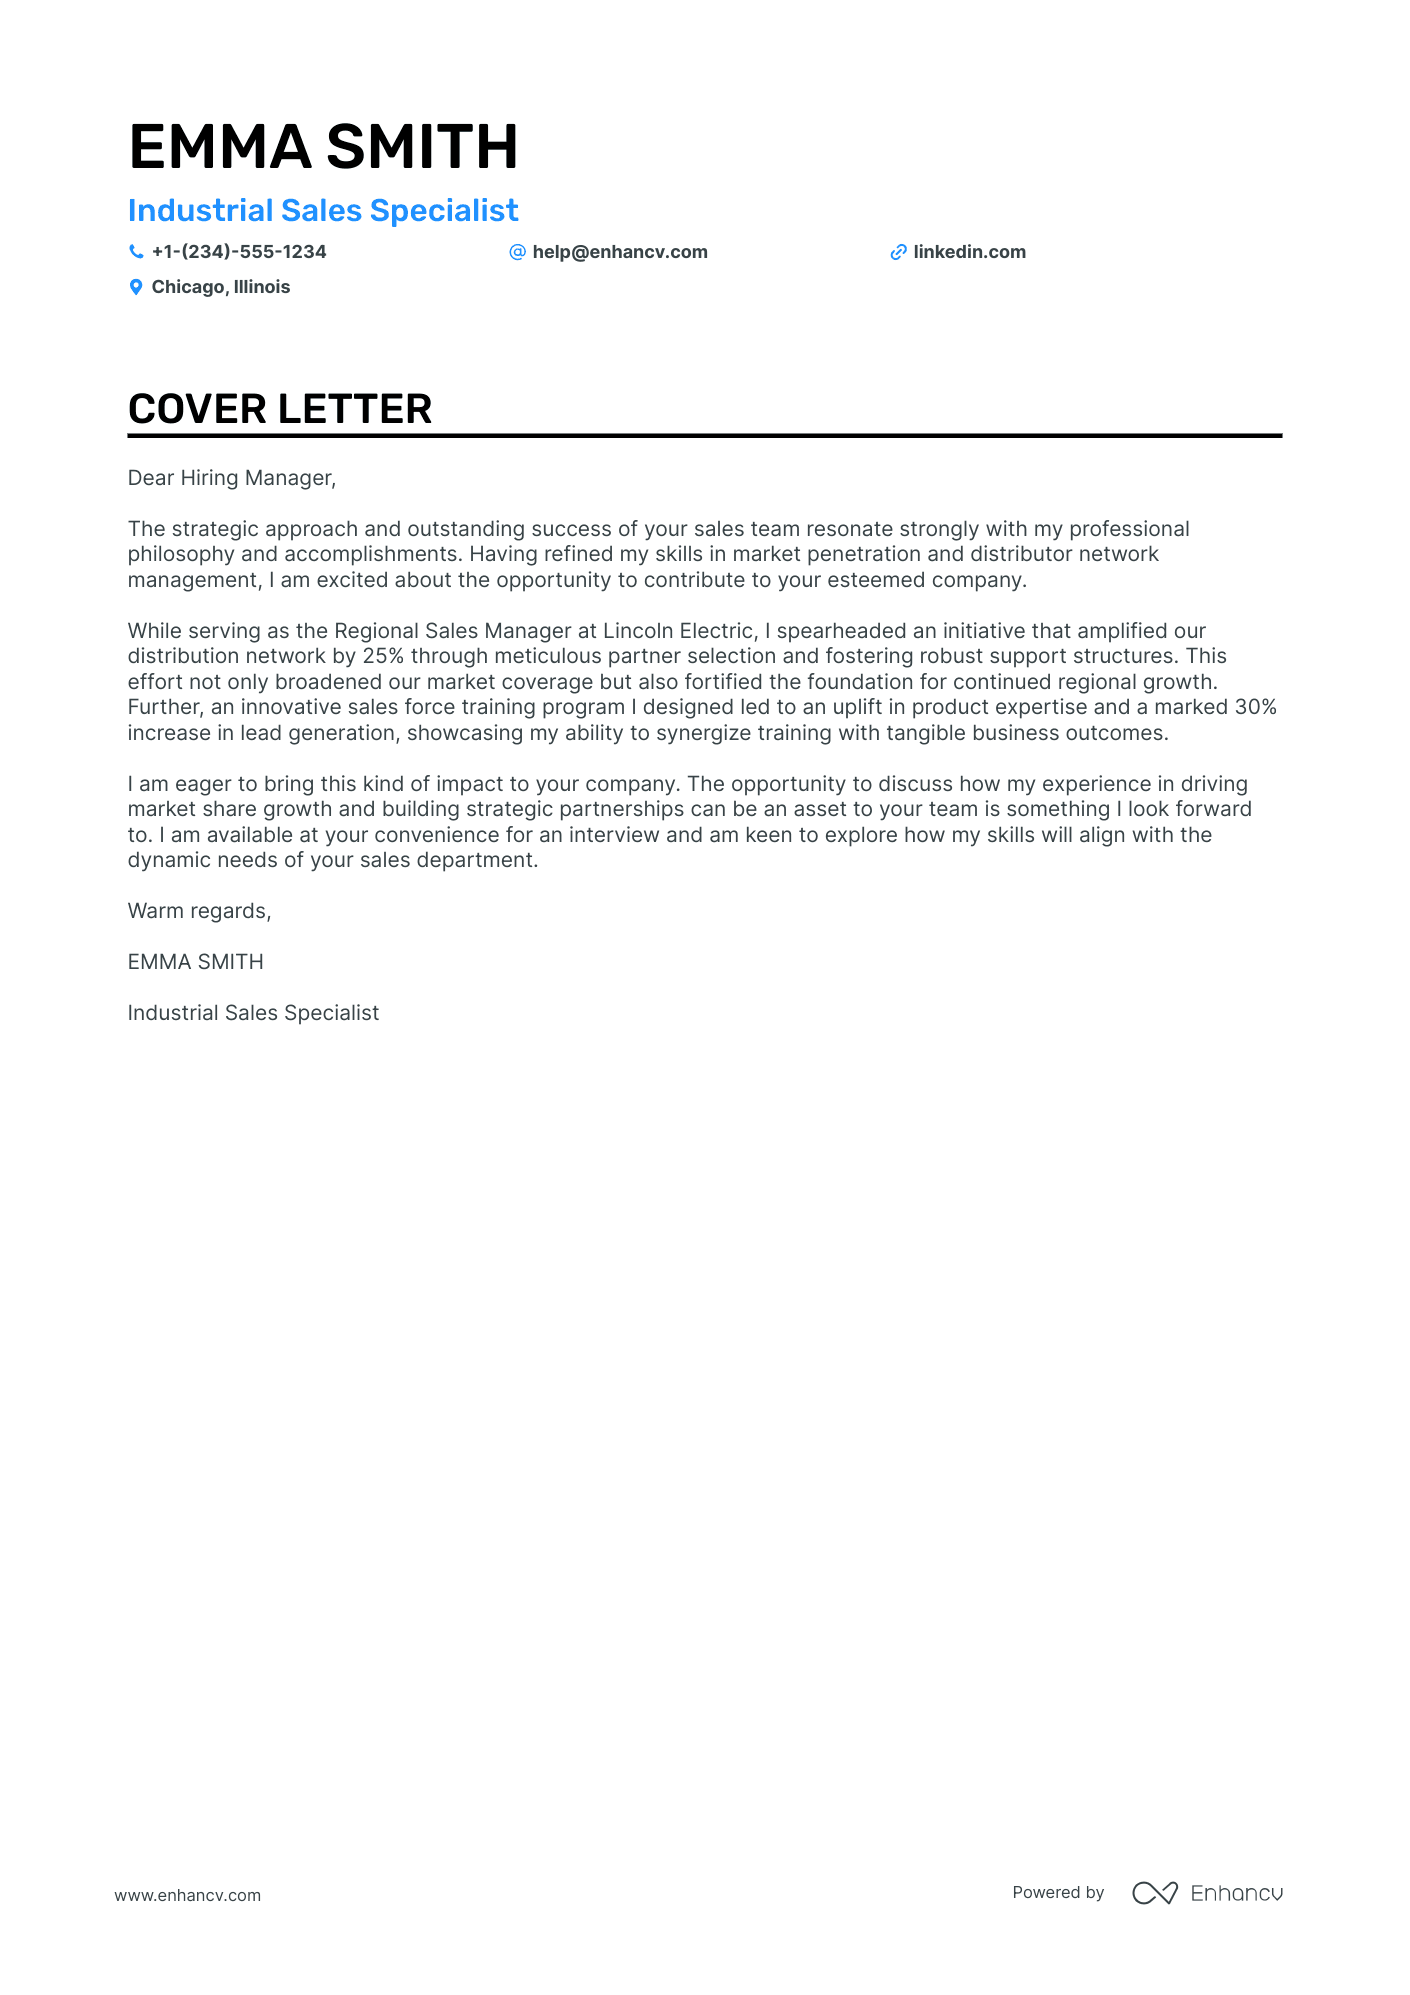 Distribution Sales Manager cover letter